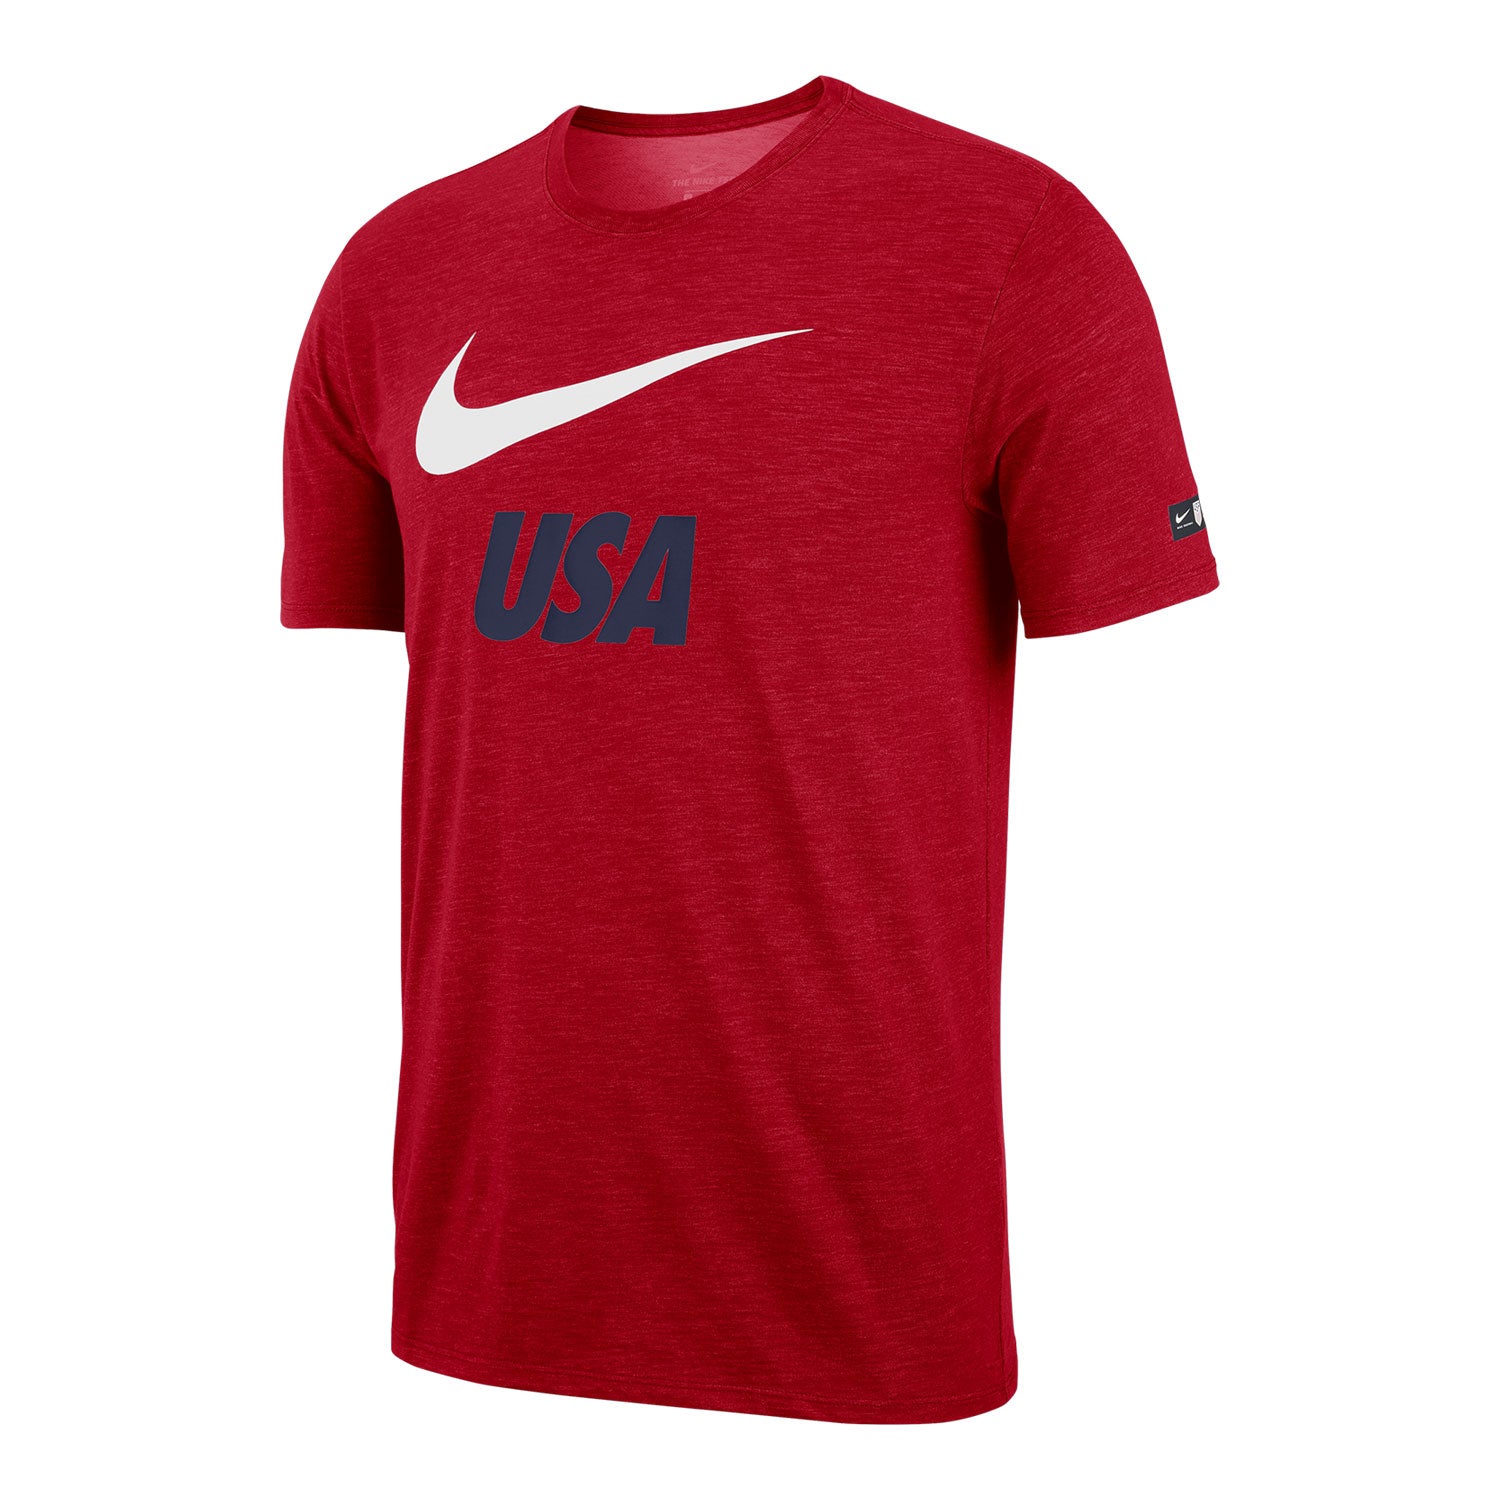 Men's USA Swoosh Red - Official U.S. Soccer